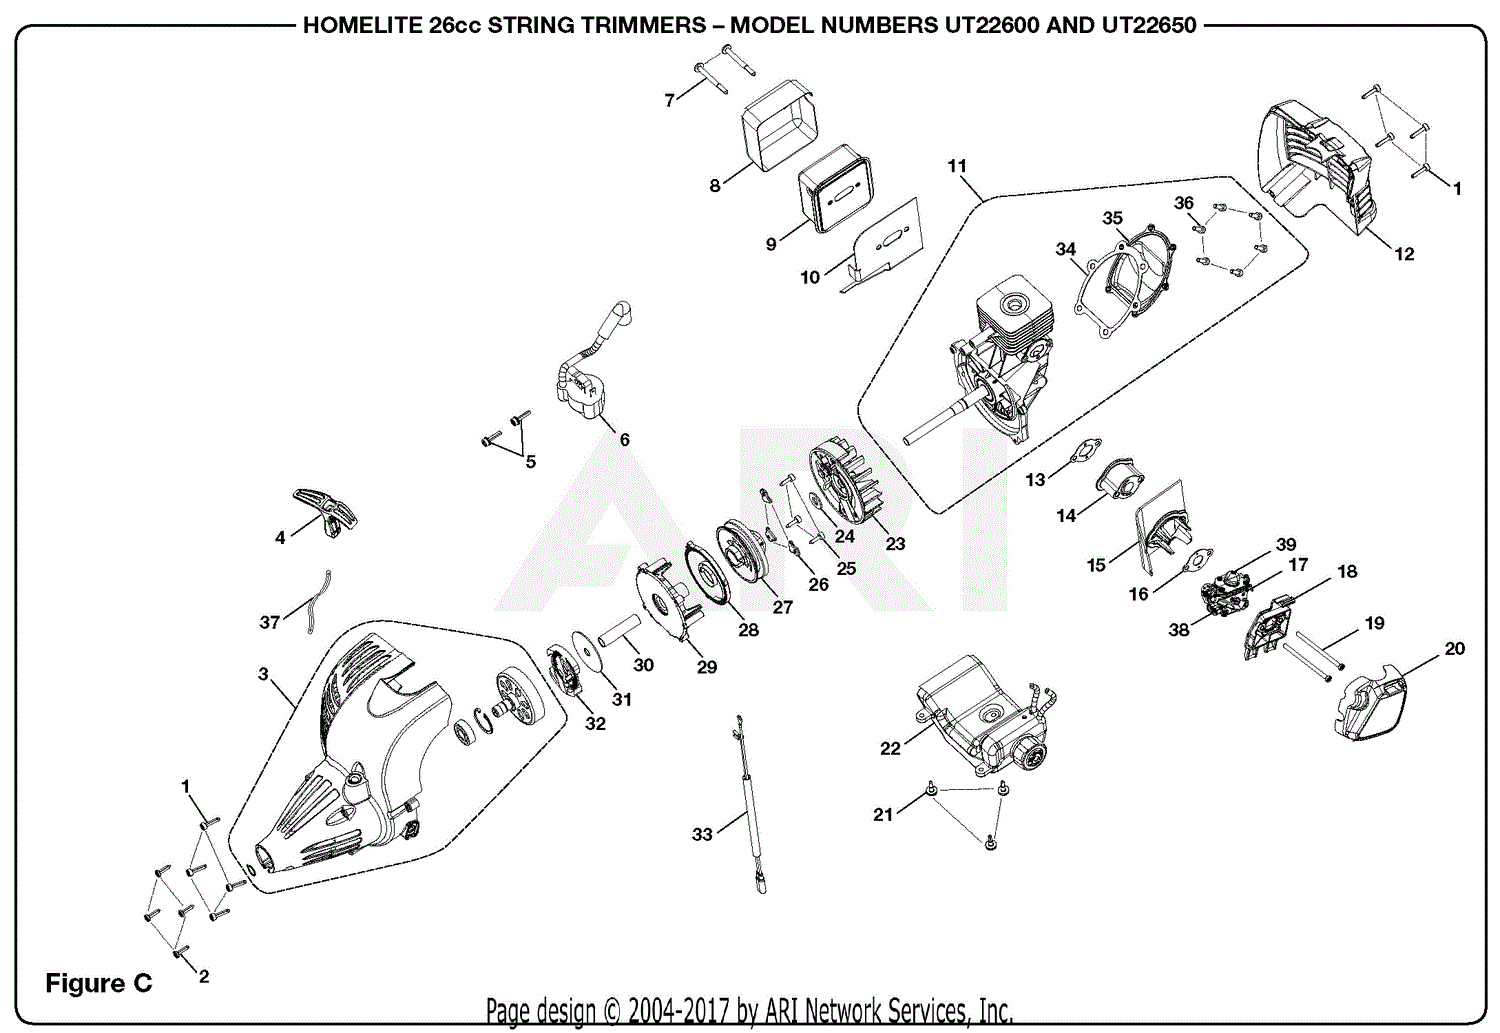 Homelite Ut22600 26cc String Trimmer Parts Diagram For